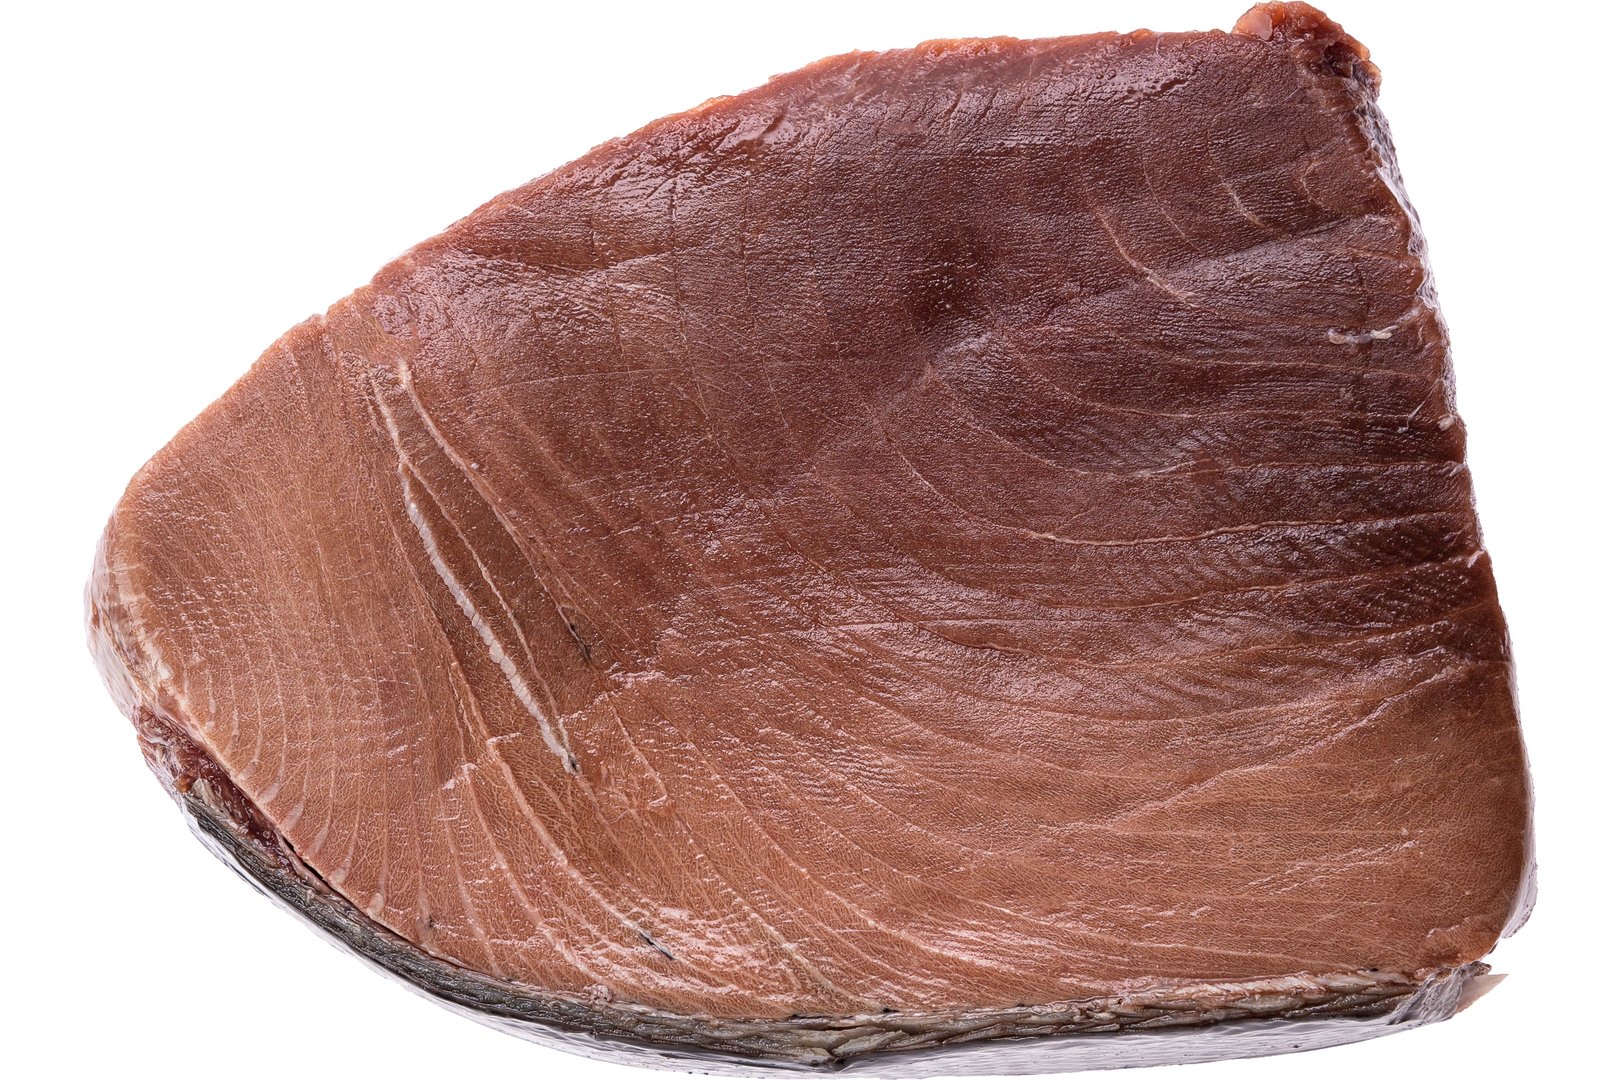 Photo Tuna fillet "Bluefin tuna" NORWAY